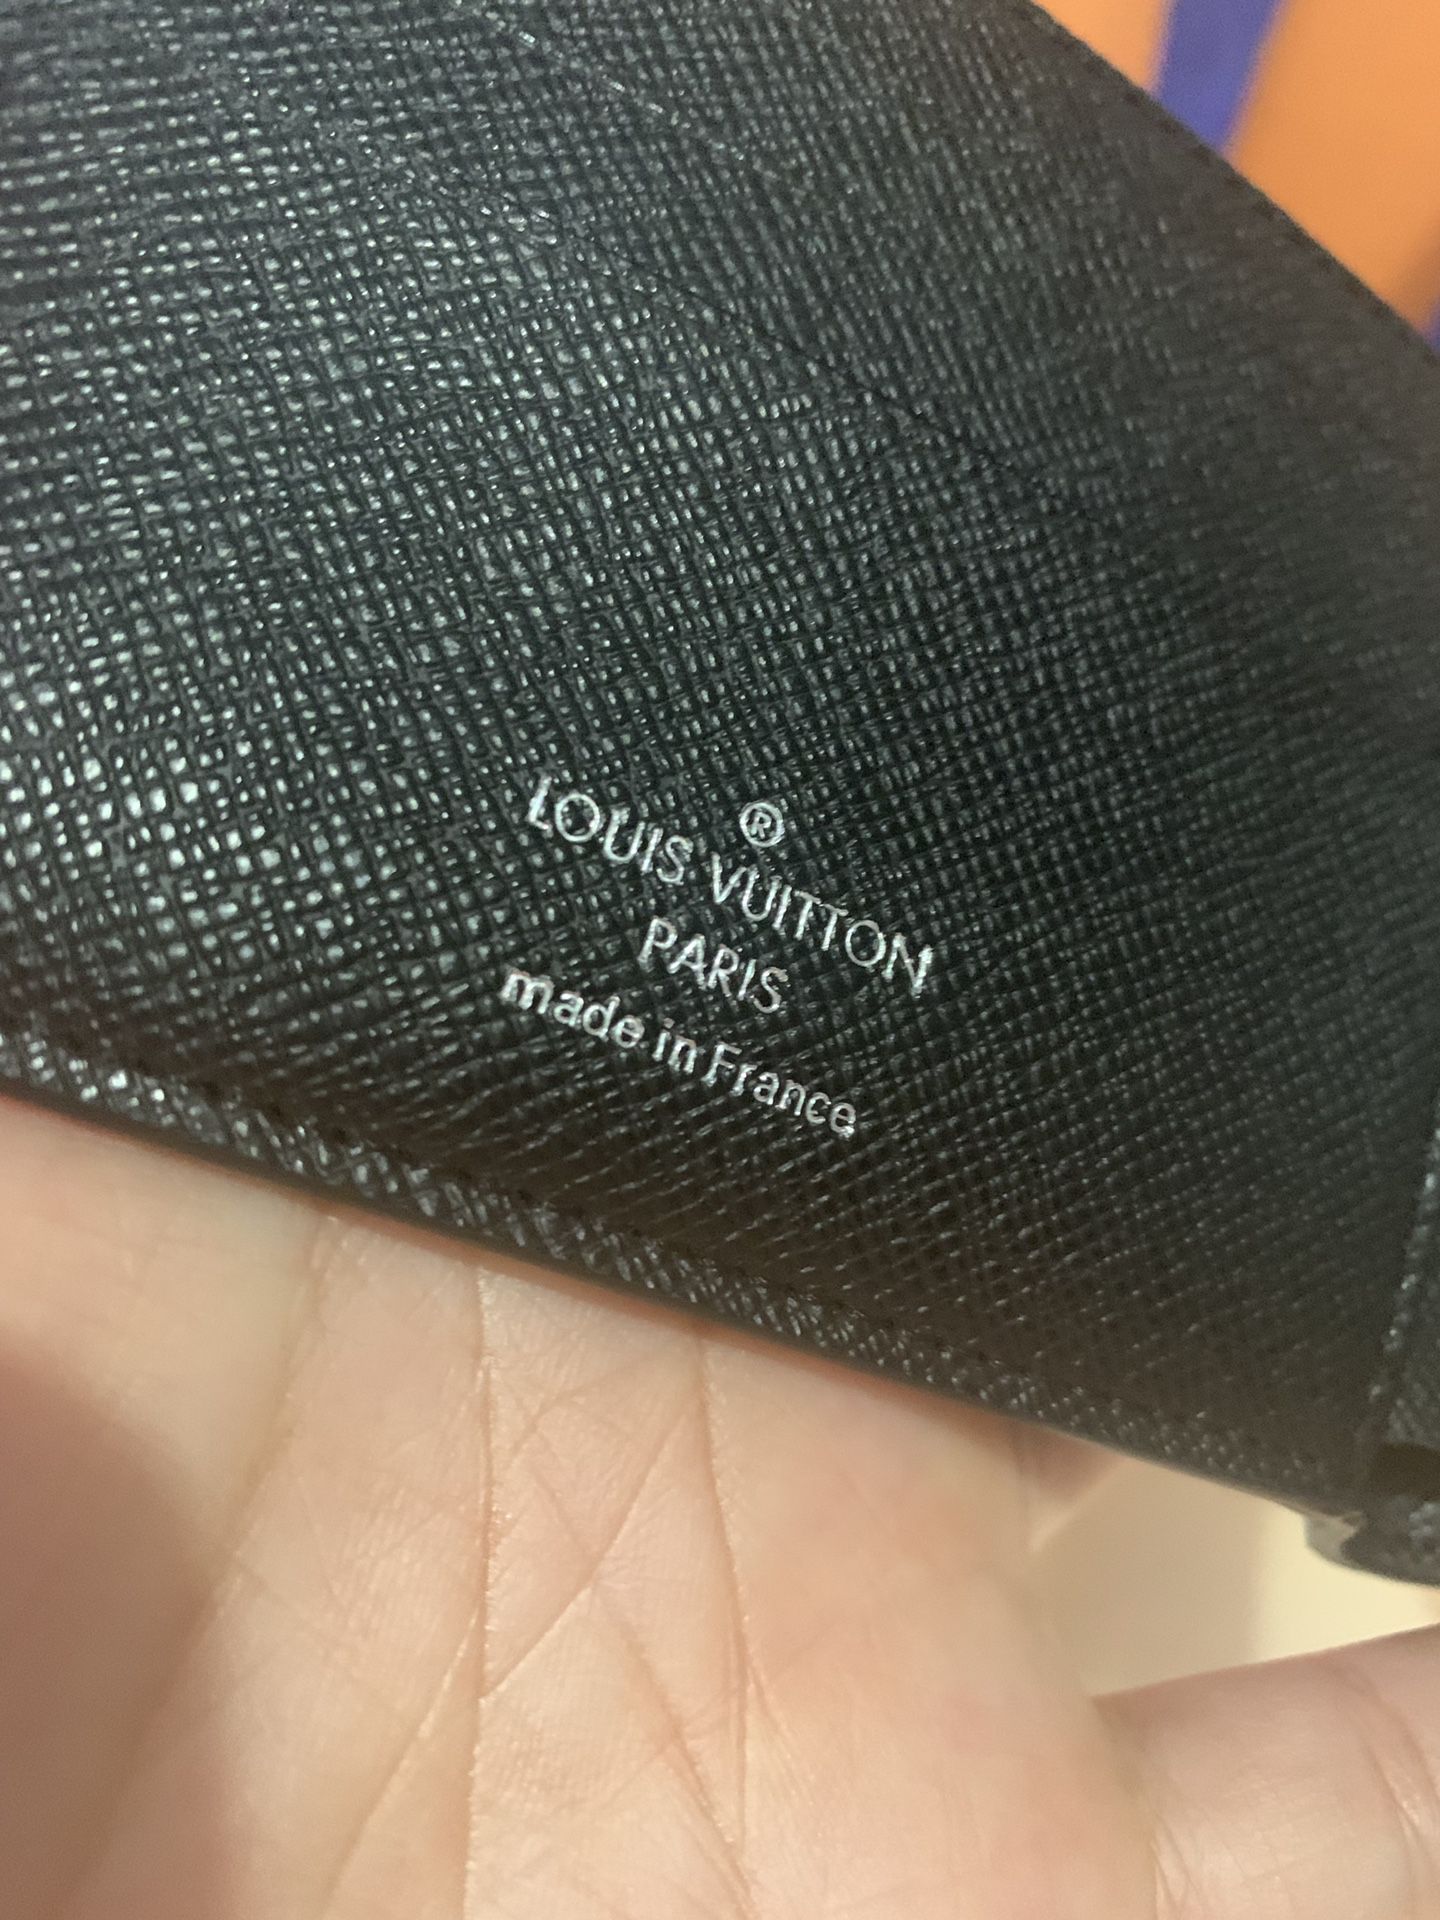 Louis Vuitton Vertical Monogram Eclipse Zippy Wallet for Sale in  Scottsdale, AZ - OfferUp